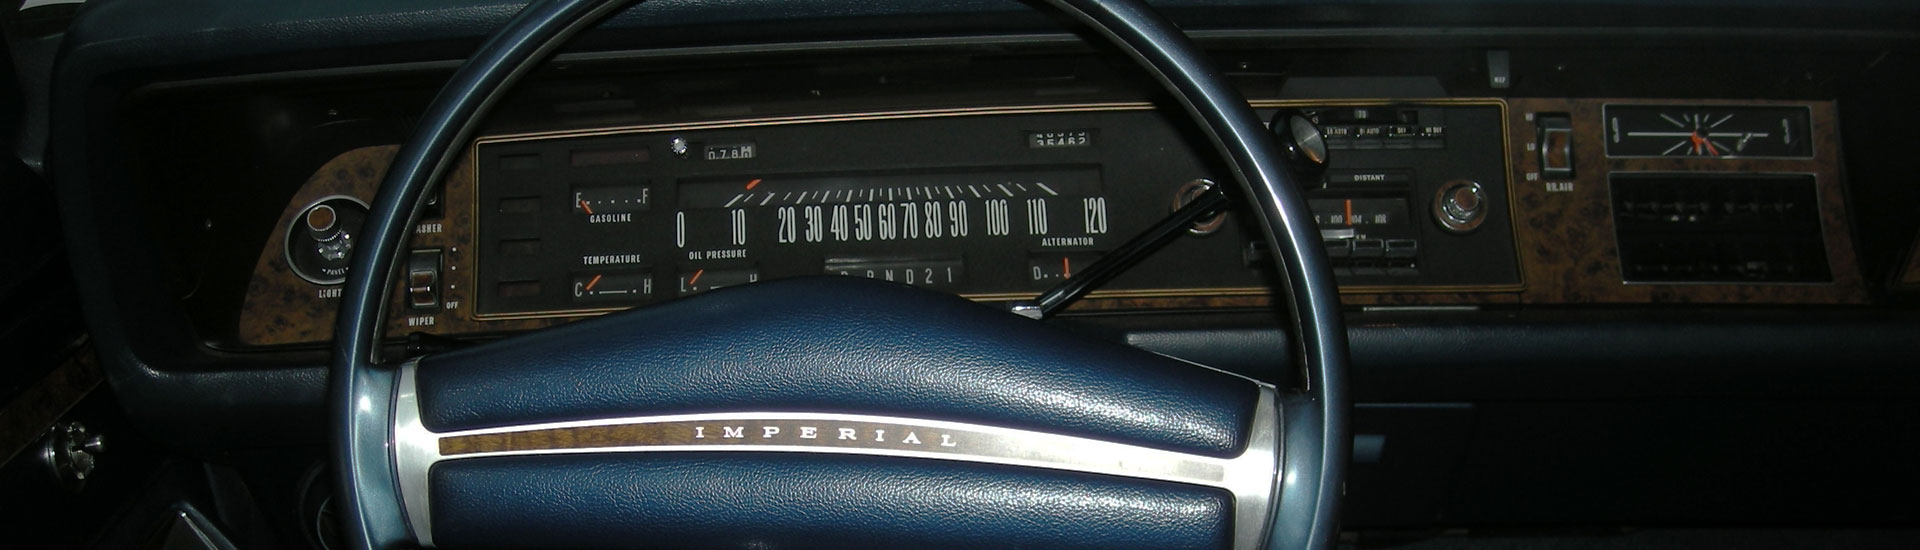 Chrysler Imperial Custom Dash Kits